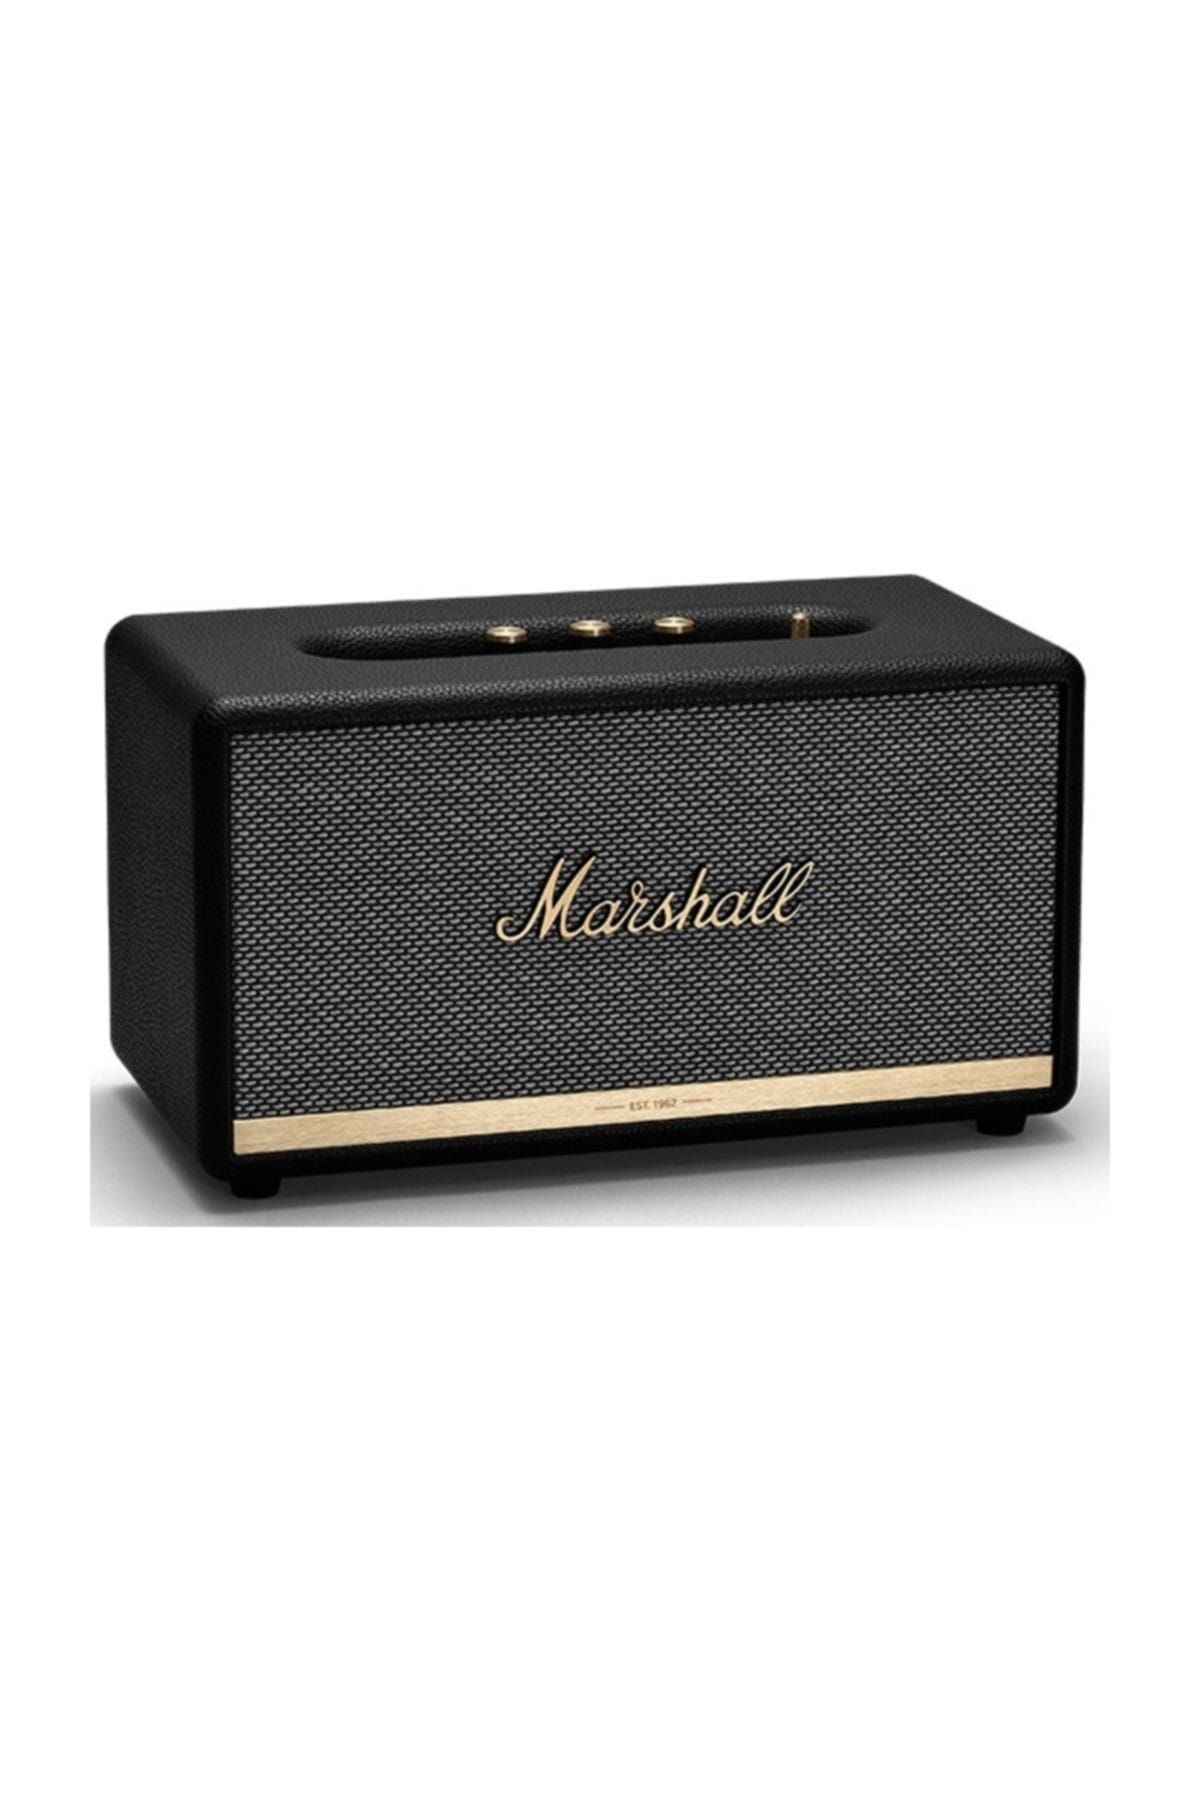 Marshall Stanmore II Bluetooth Hoparlör - Black MRSSTANMORE2BLACK